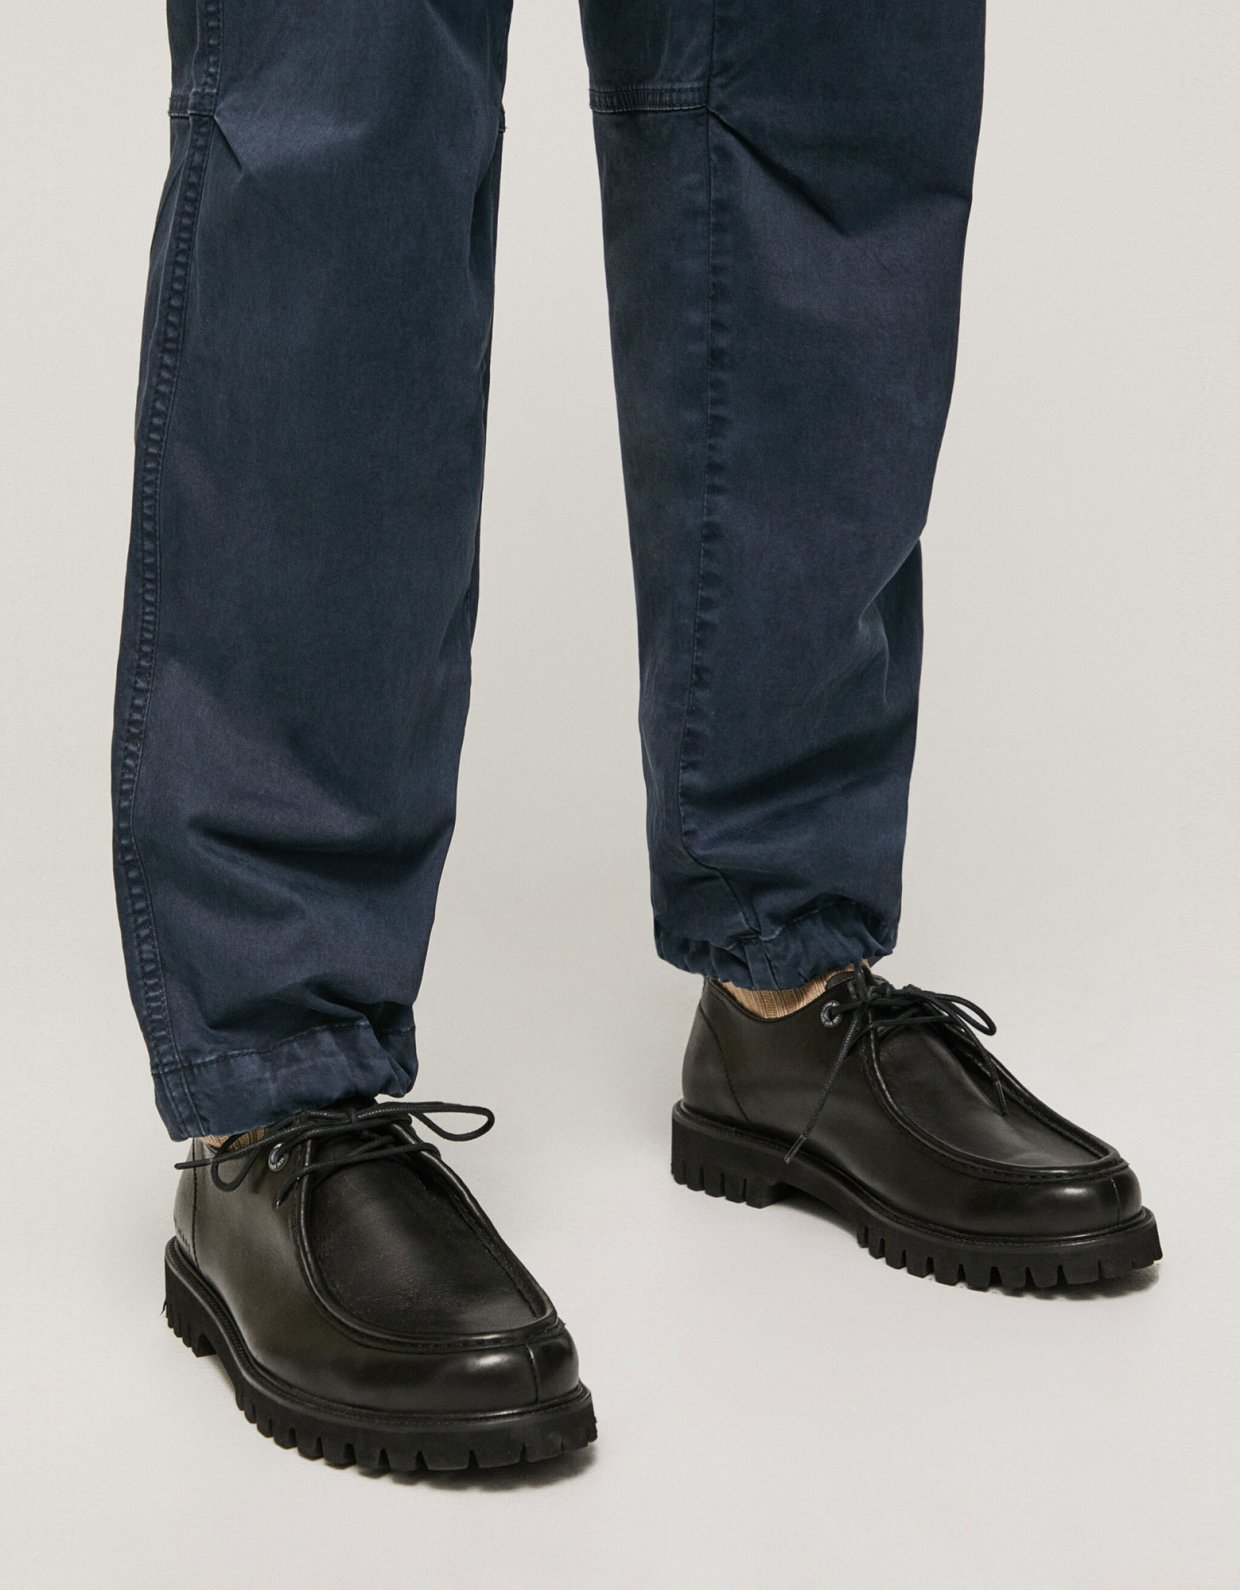 Pepe Jeans Gear insert cotton twill pants dulwich